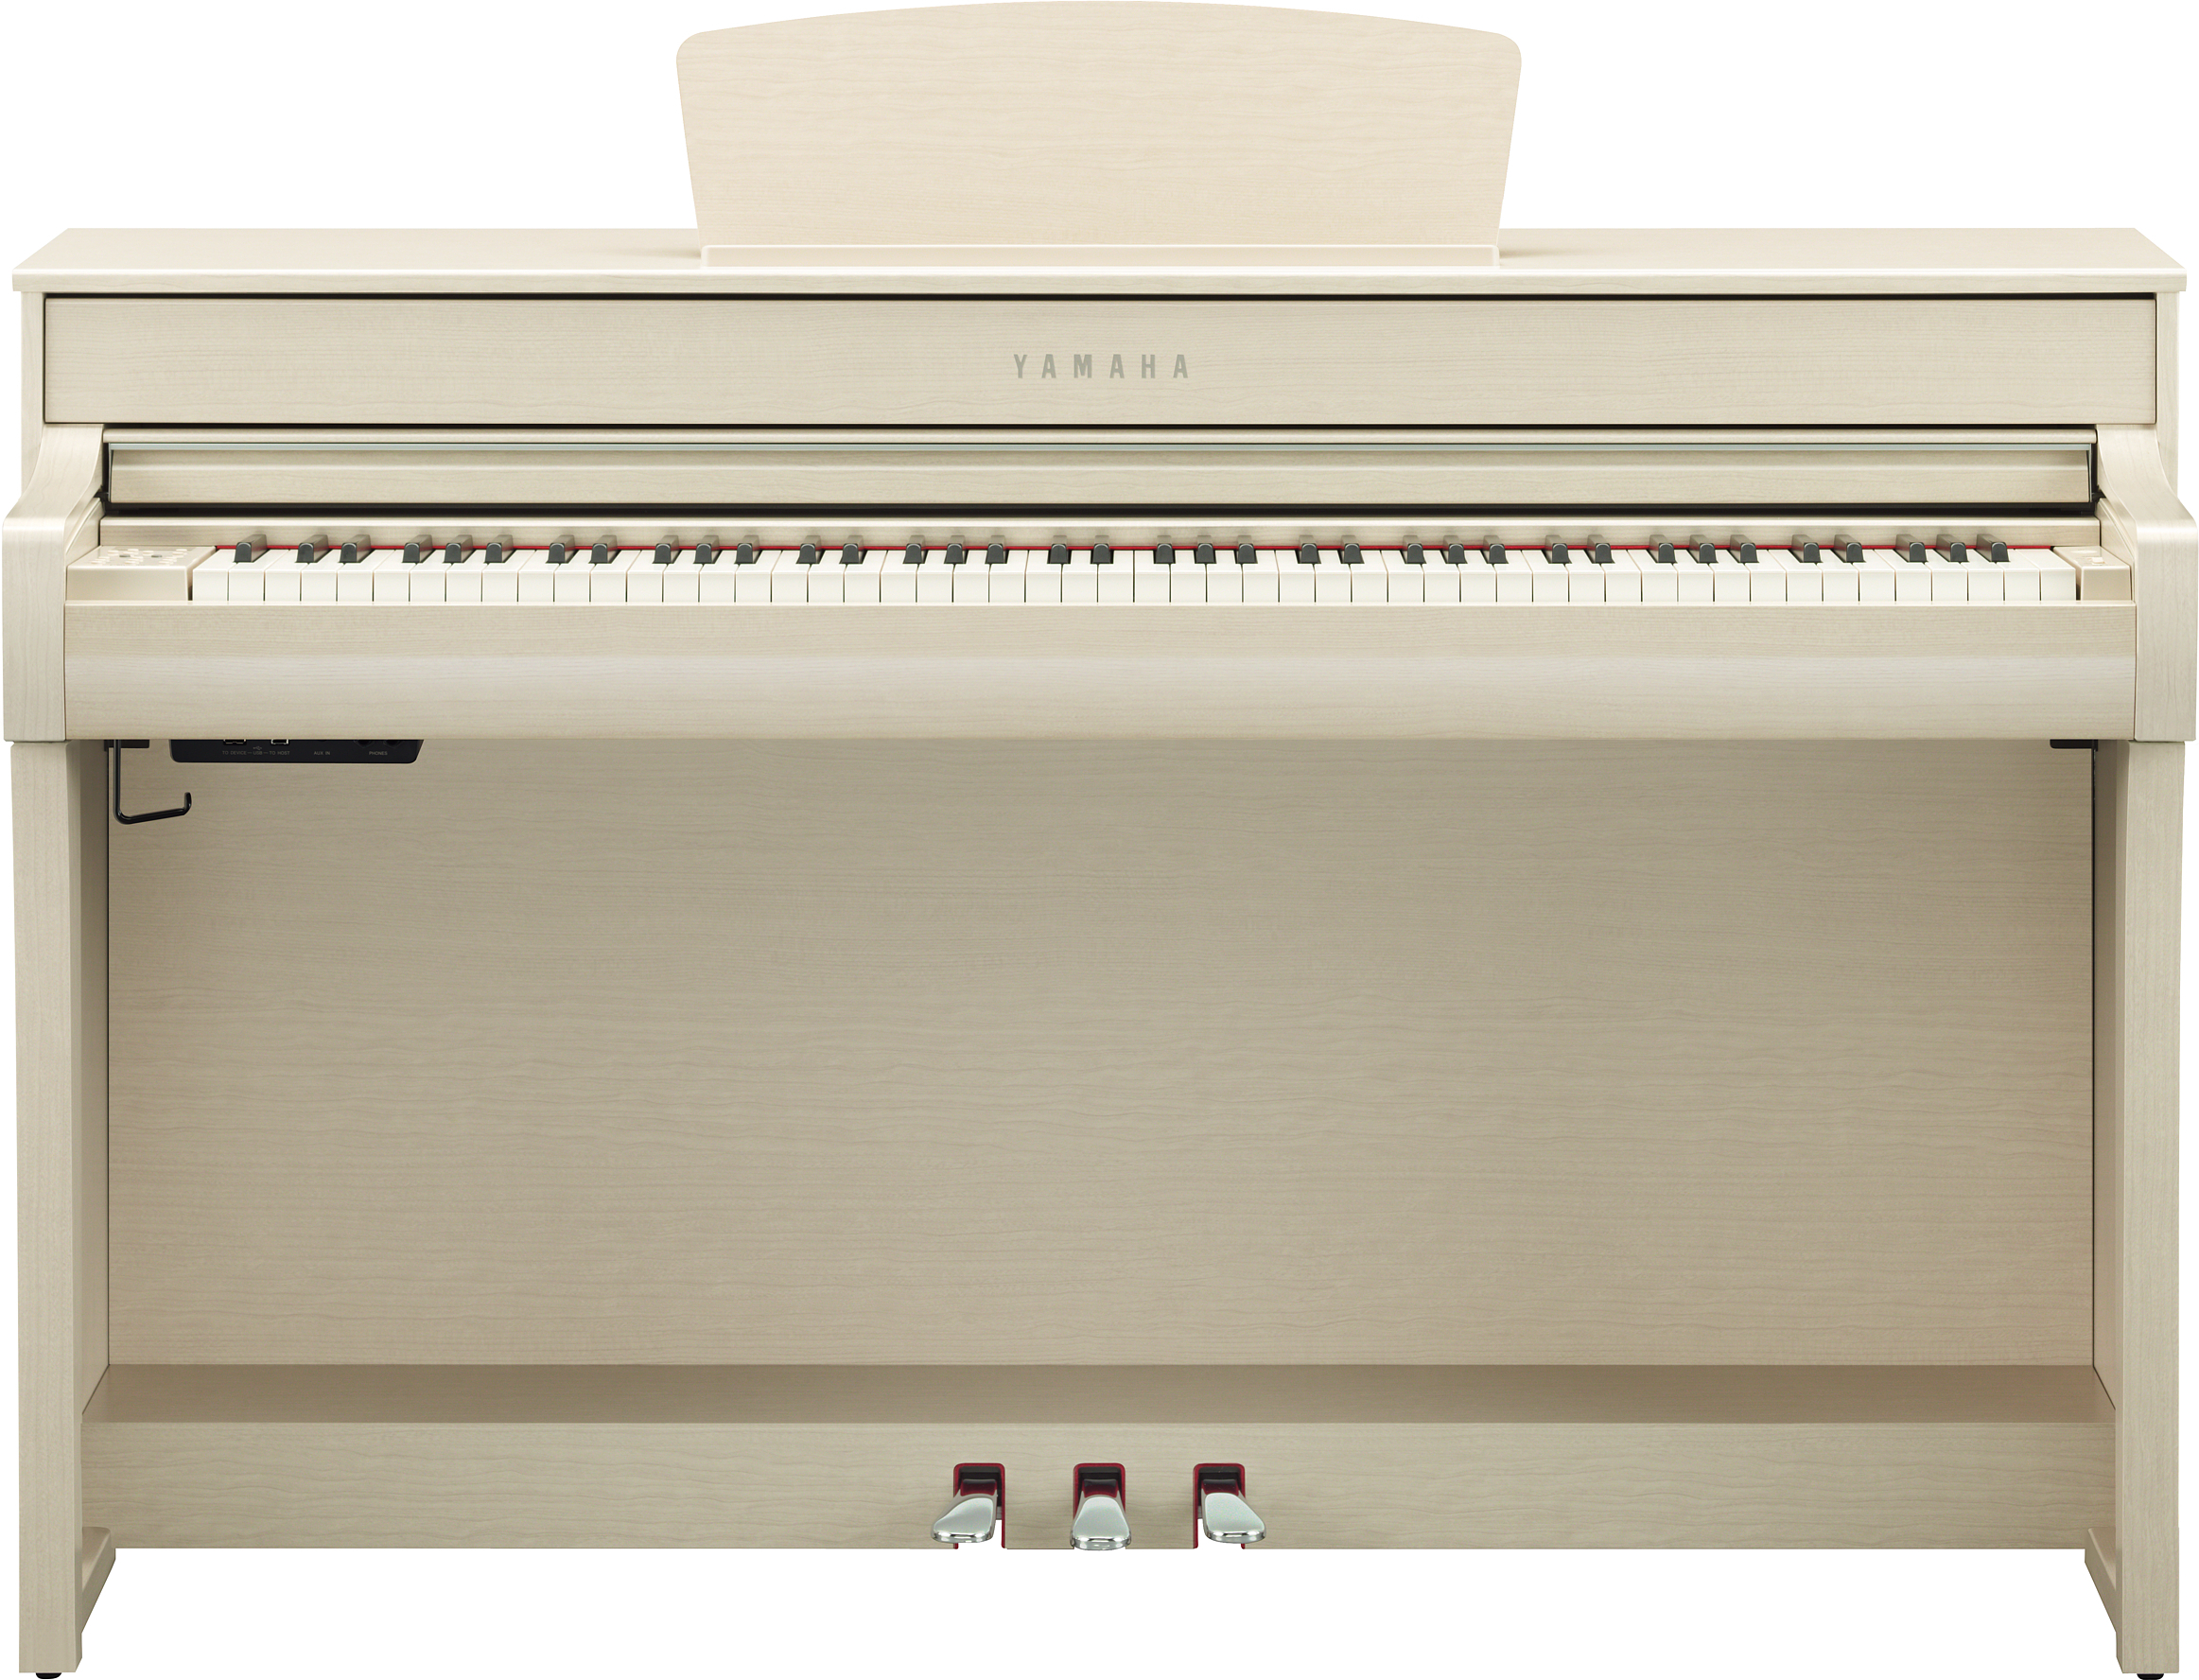 Yamaha Clp735wa - Digitale piano met meubel - Main picture